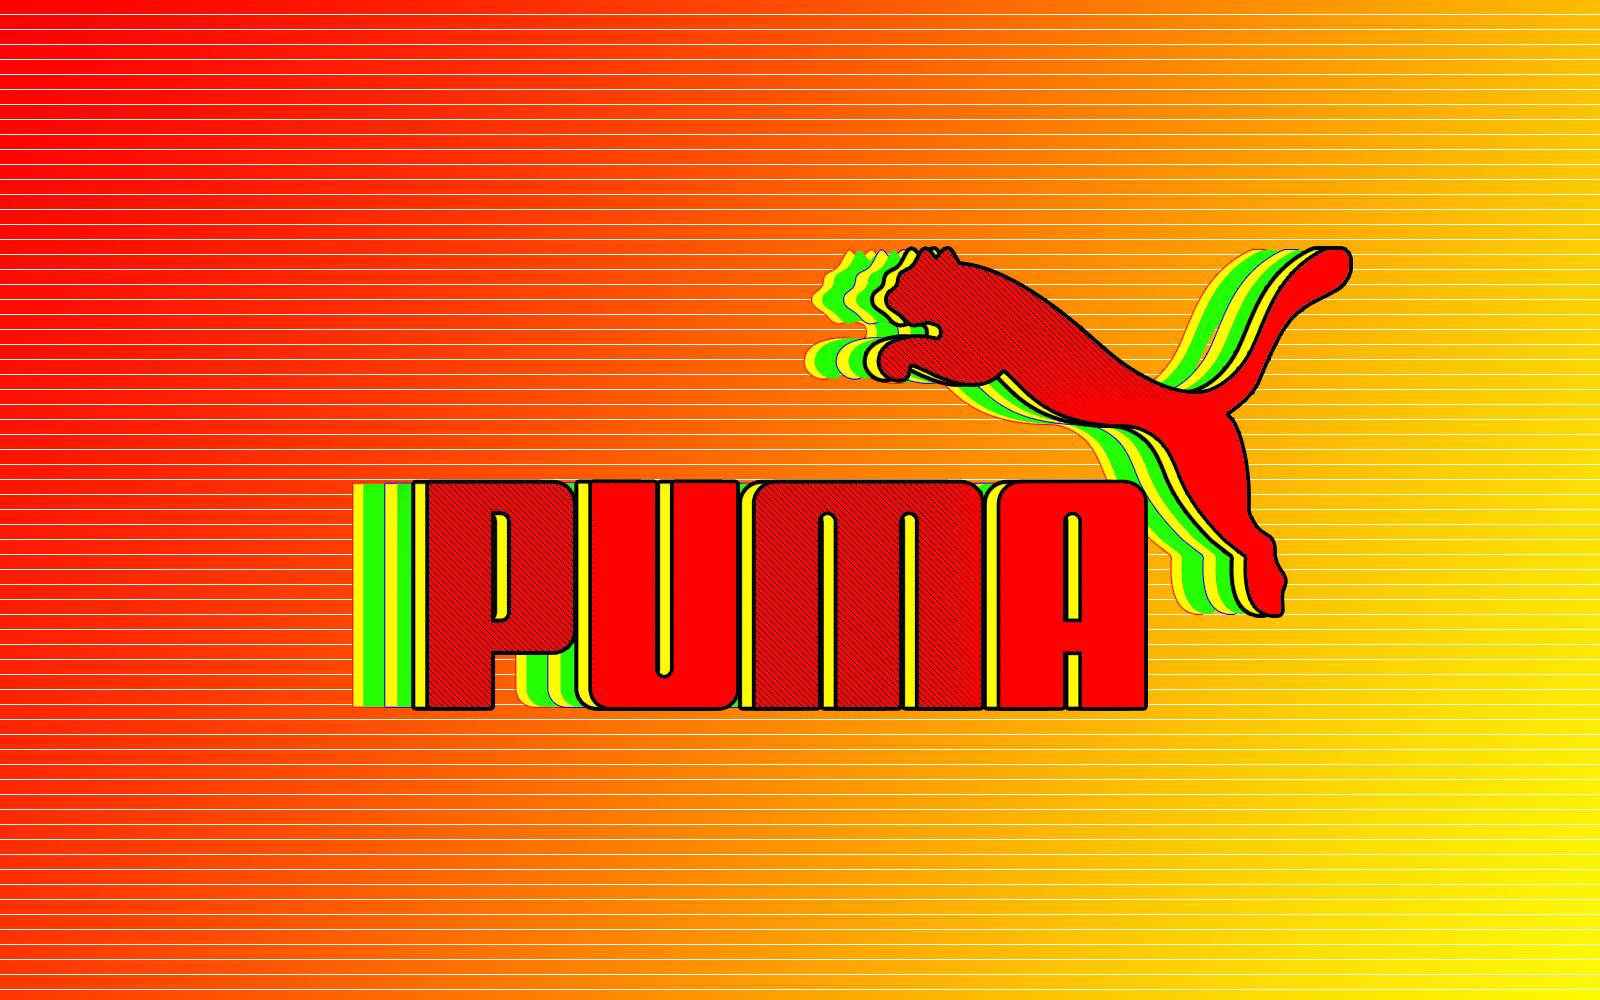 https://blogger.googleusercontent.com/img/b/R29vZ2xl/AVvXsEgDmiQU3Nu20fnvz26gN6JjDMRTv7IQgaHSA-pP8HyTxgK4jVev5NsiQrpBiycOynohb5lshMCp2q7BiWZBZnR3PiVzS0v0swgxDPzW8tMZHd1xyRiNjMwQA9TxKPx9kvKCRilH7RR43Uo/s1600/Puma_Logo_by_wytzelangen.jpg